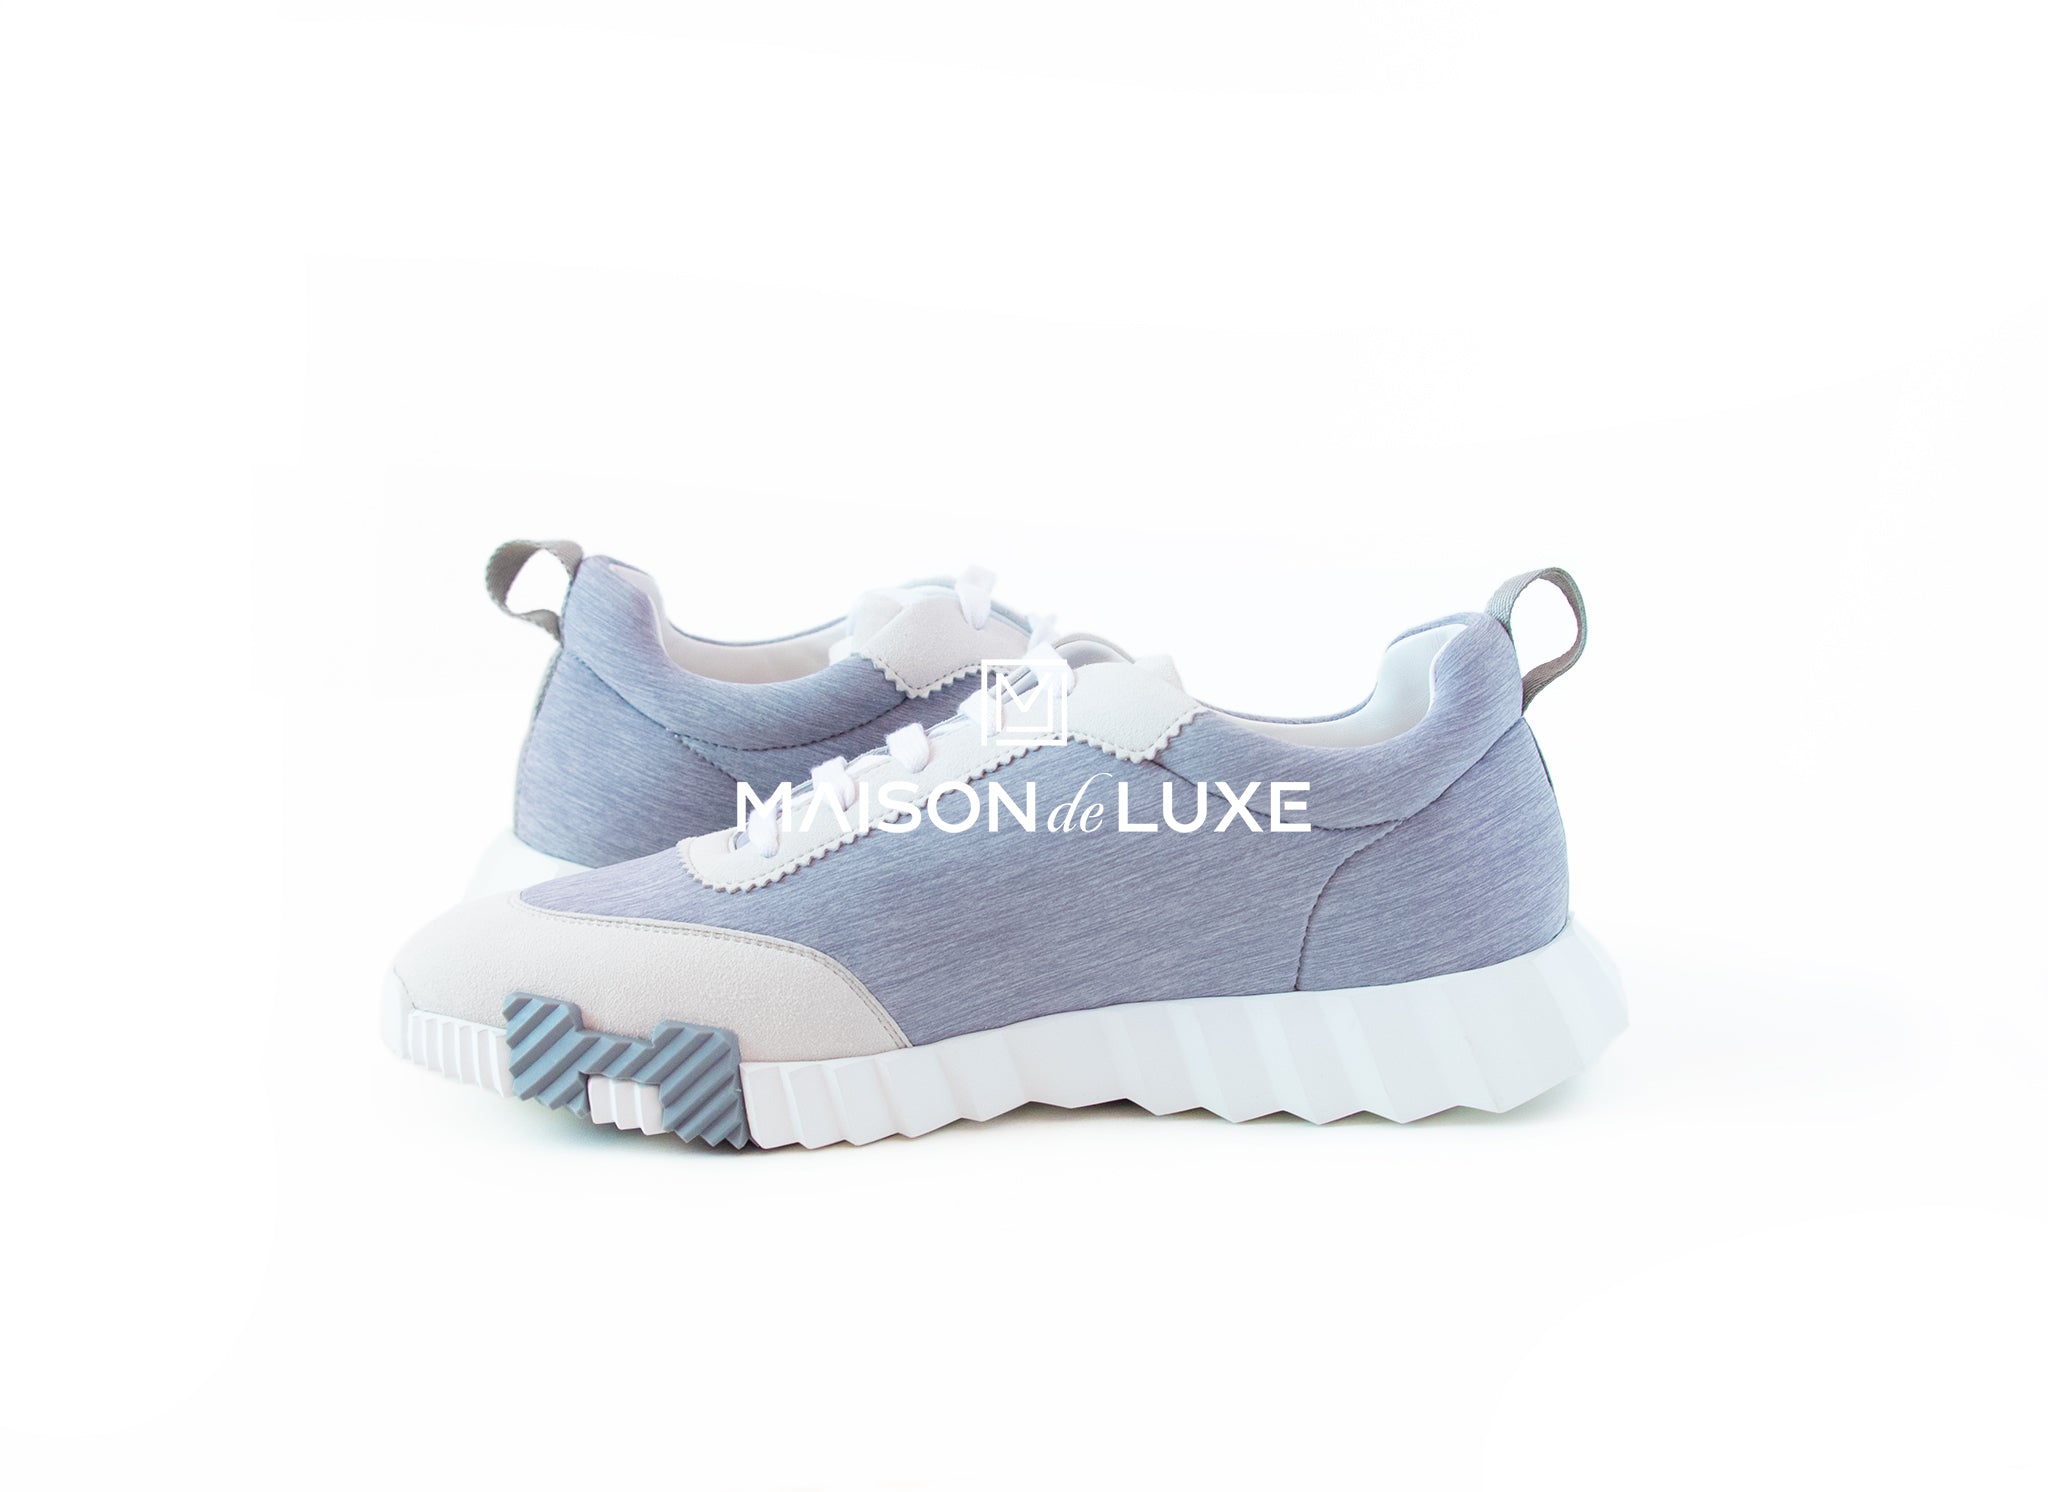 Louis Vuitton Men Shoes Brand New Size 10-11 - clothing